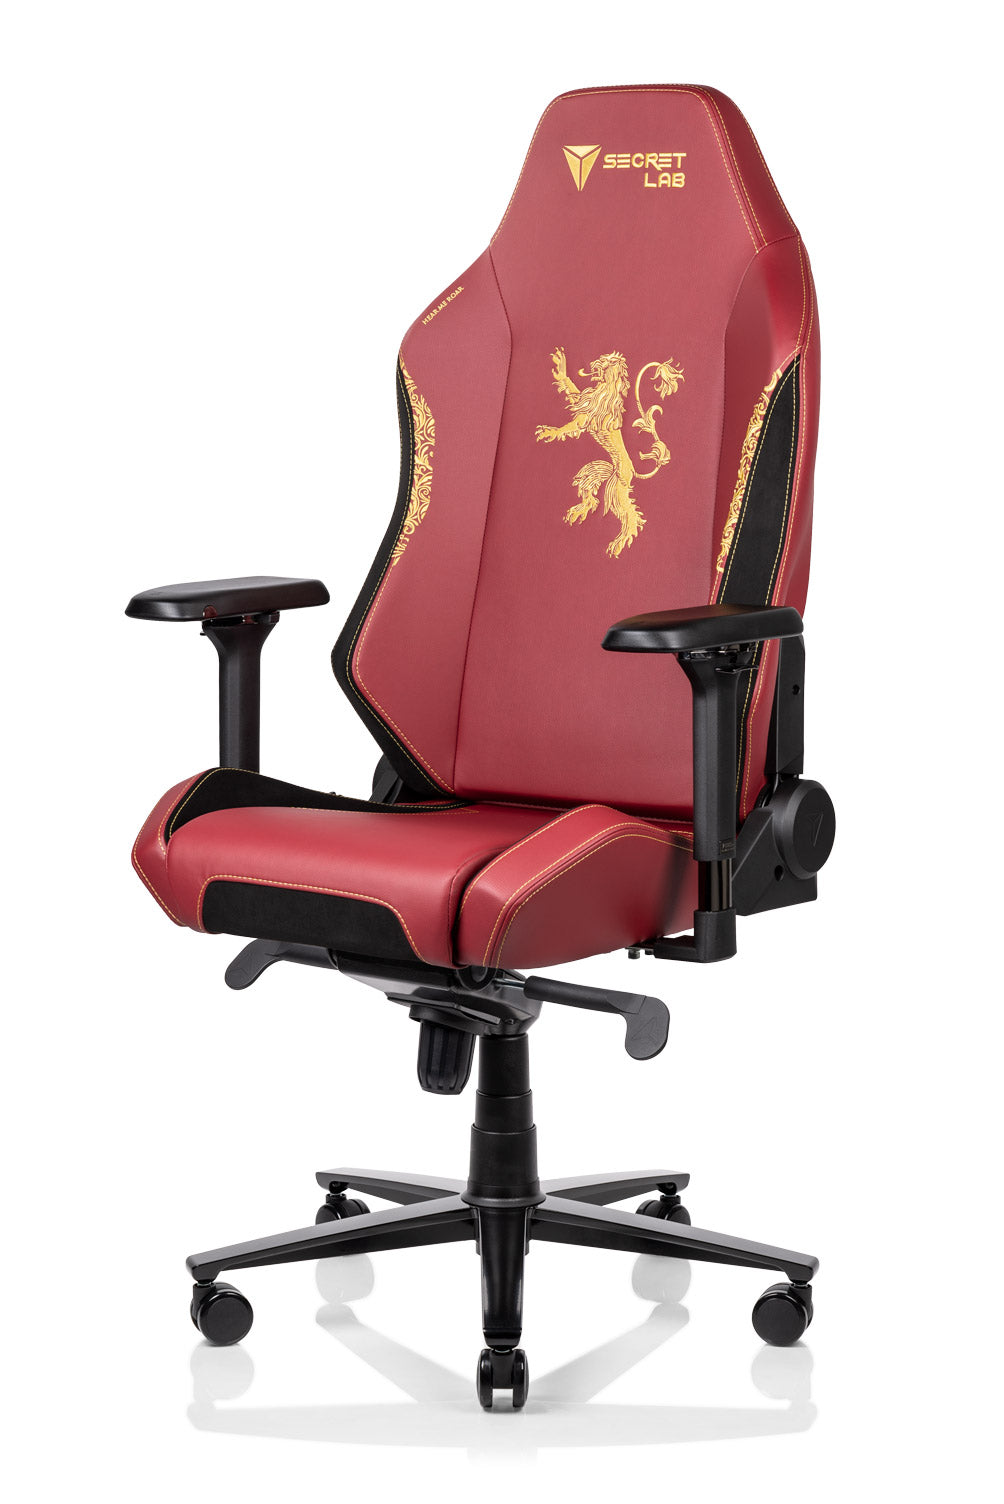 Gaming Chair Ebay Australia